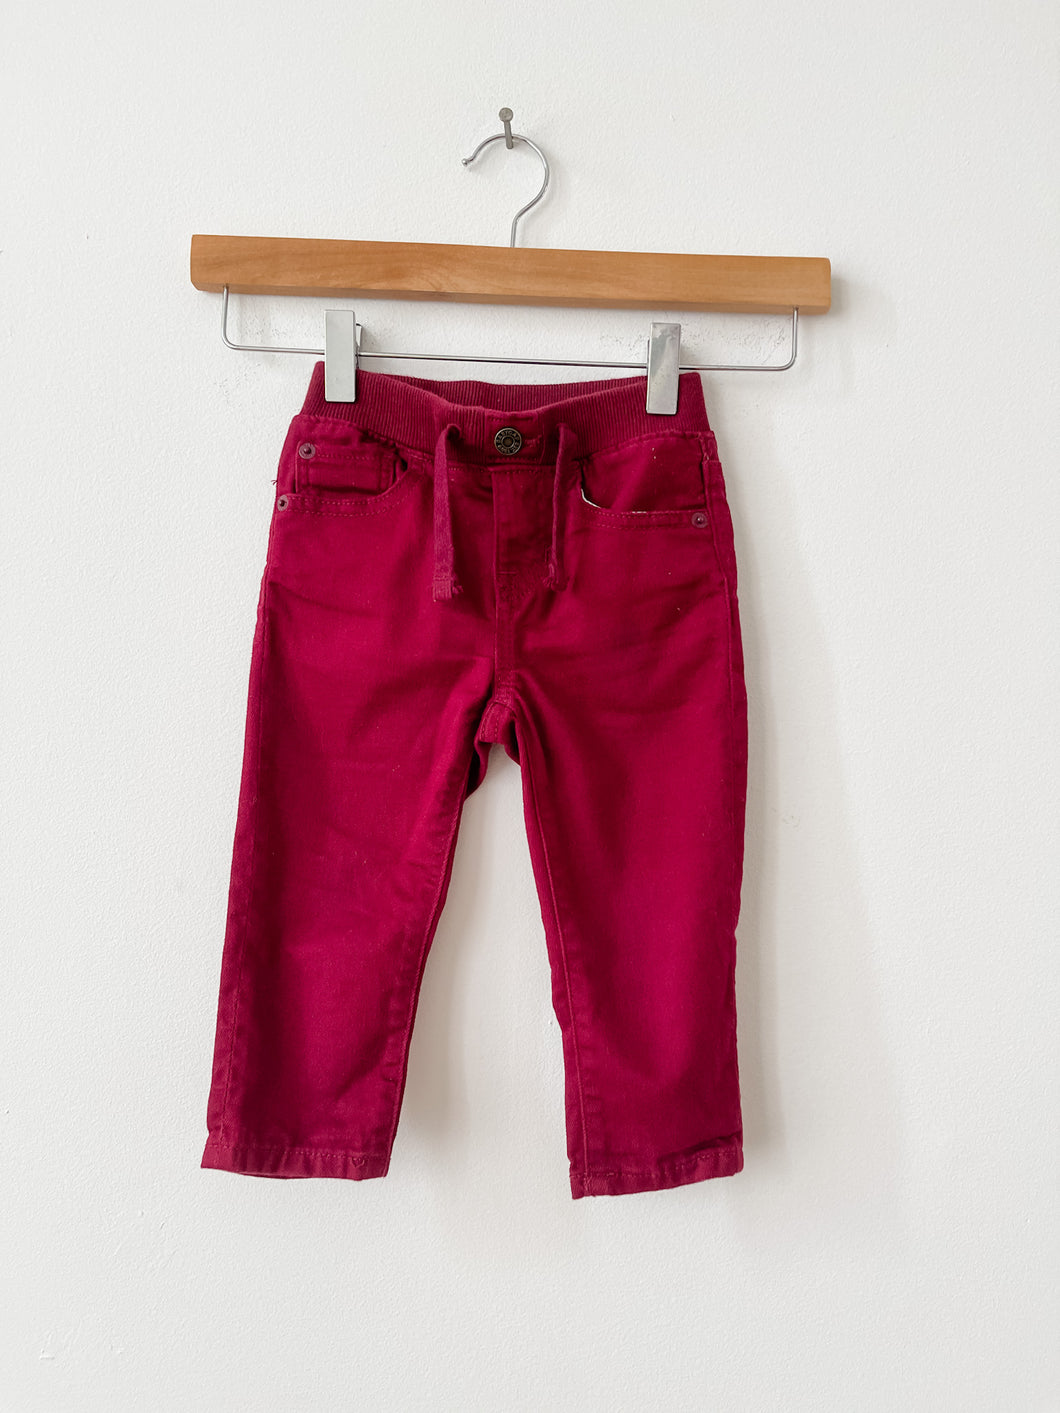 Kids Burgundy Gap Jeans Size 12-18 Months